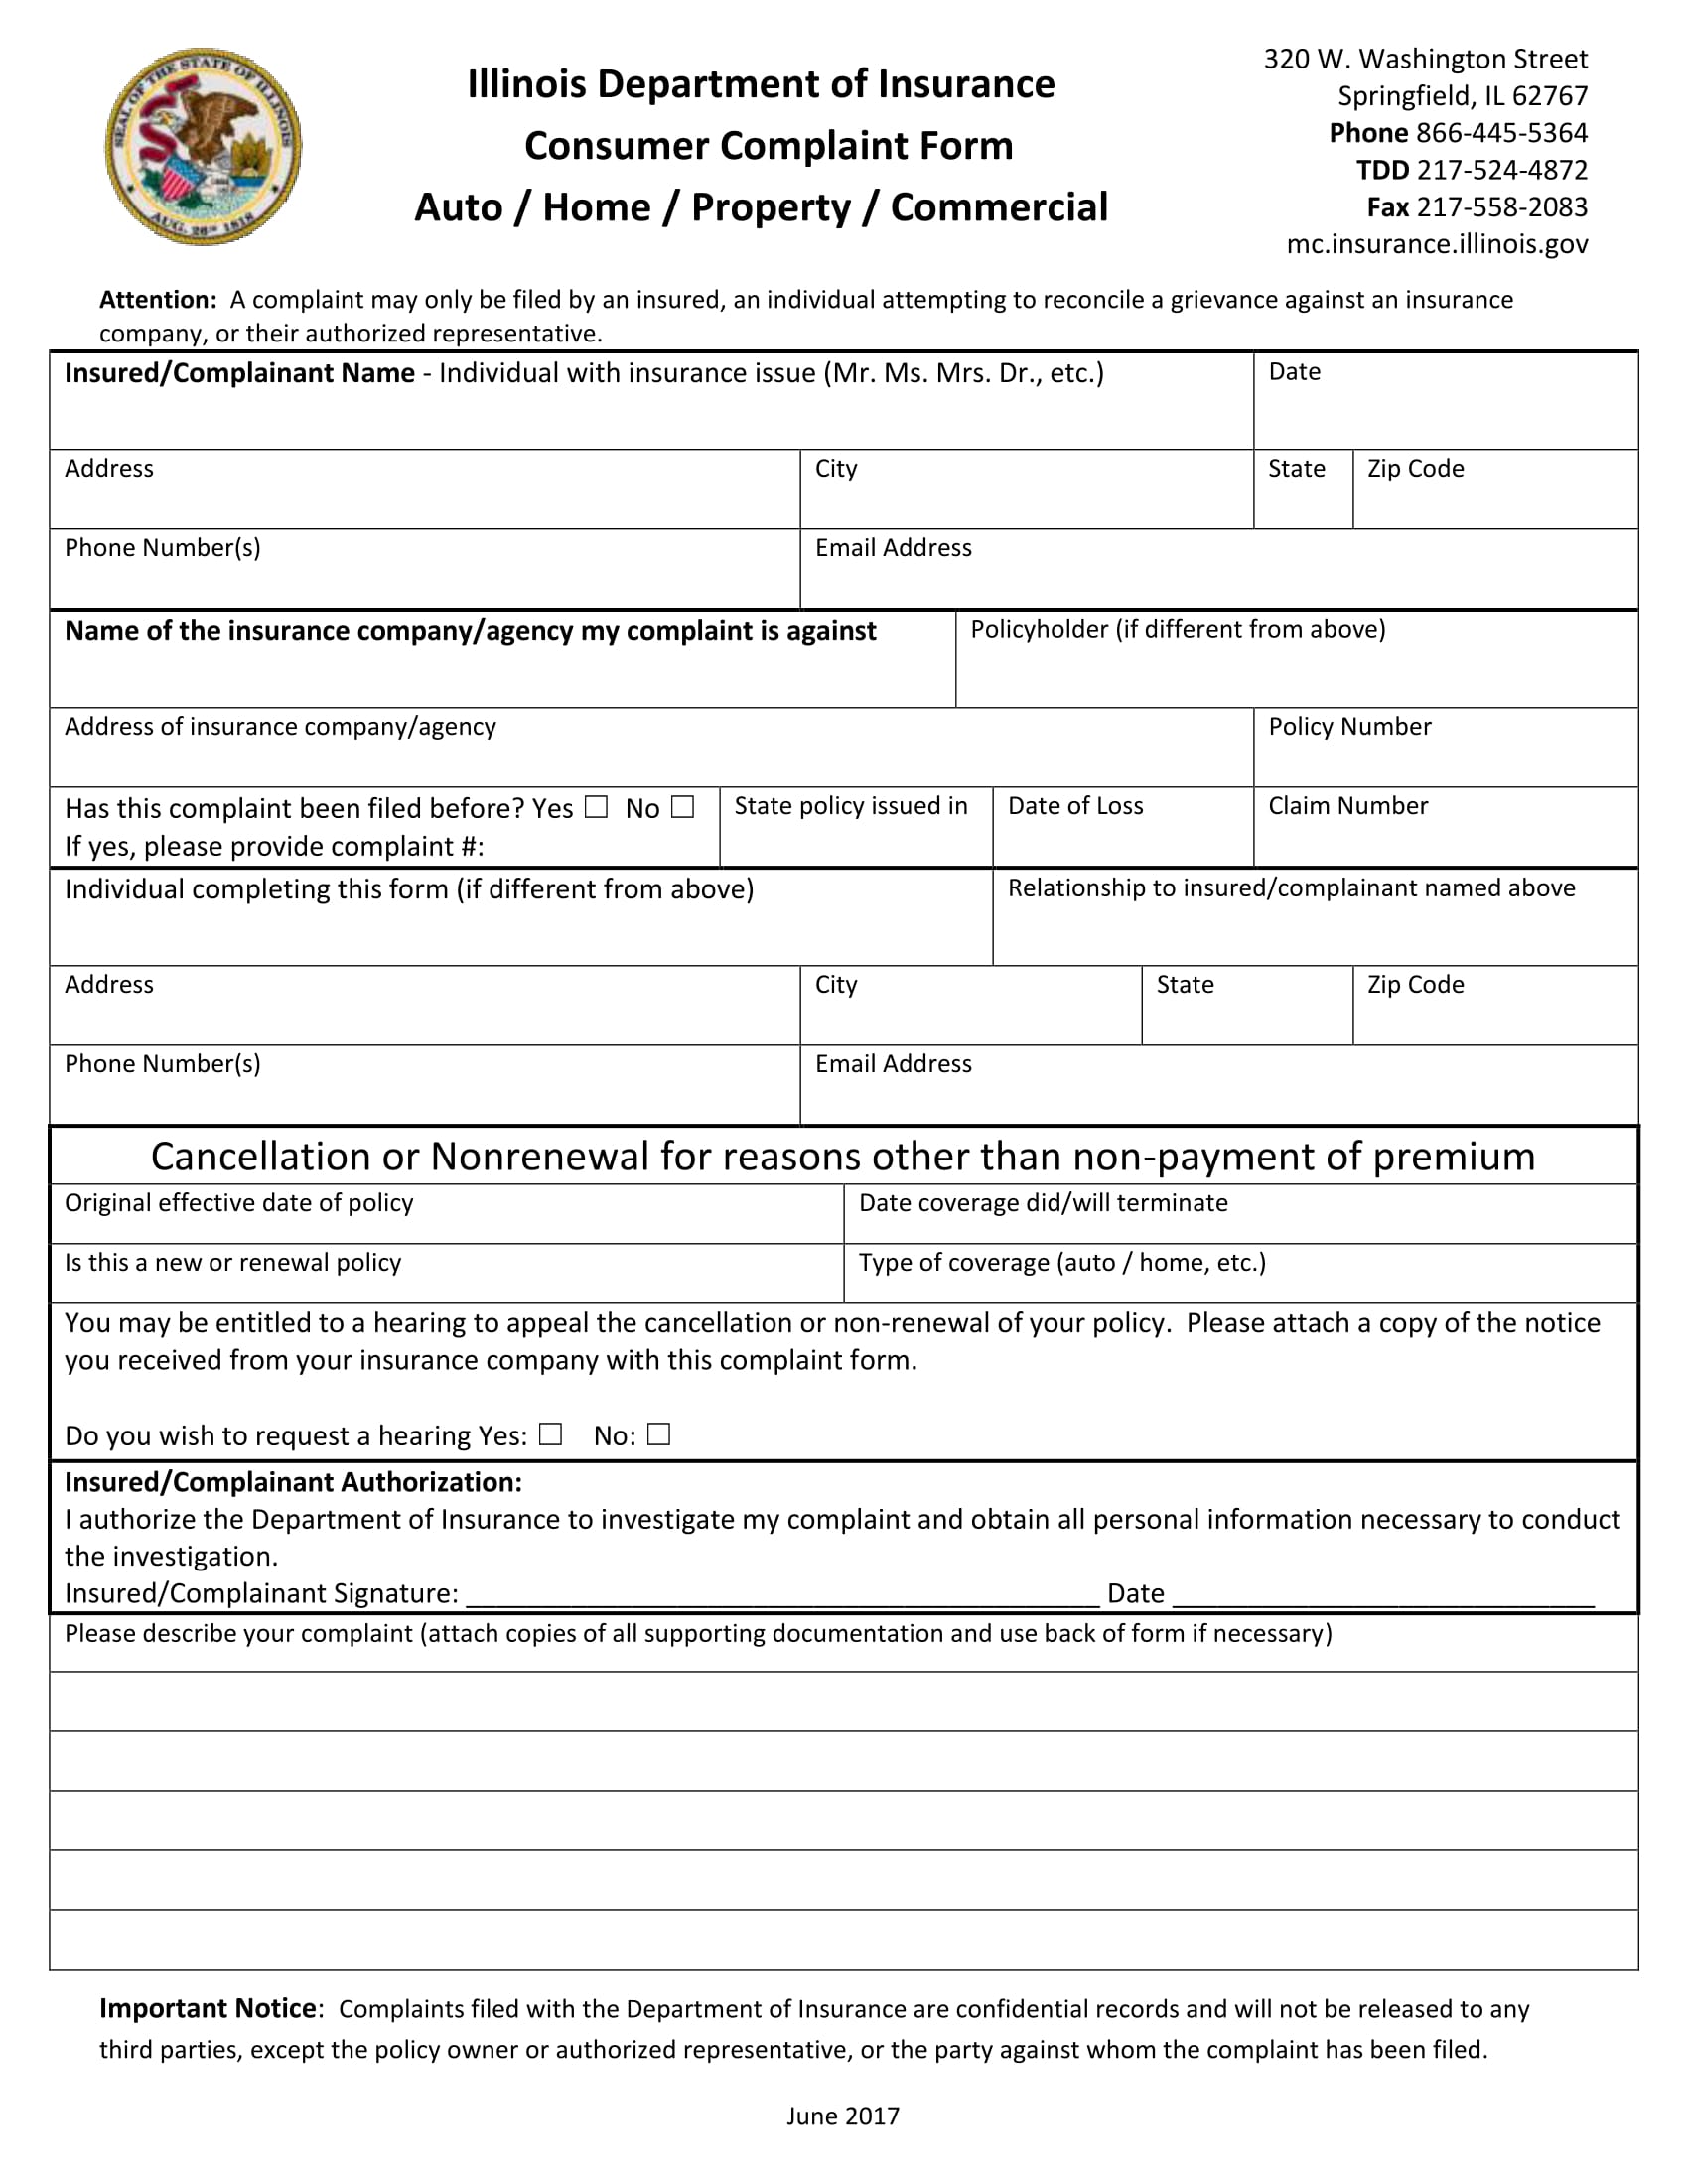 insurance consumer complaint form 1